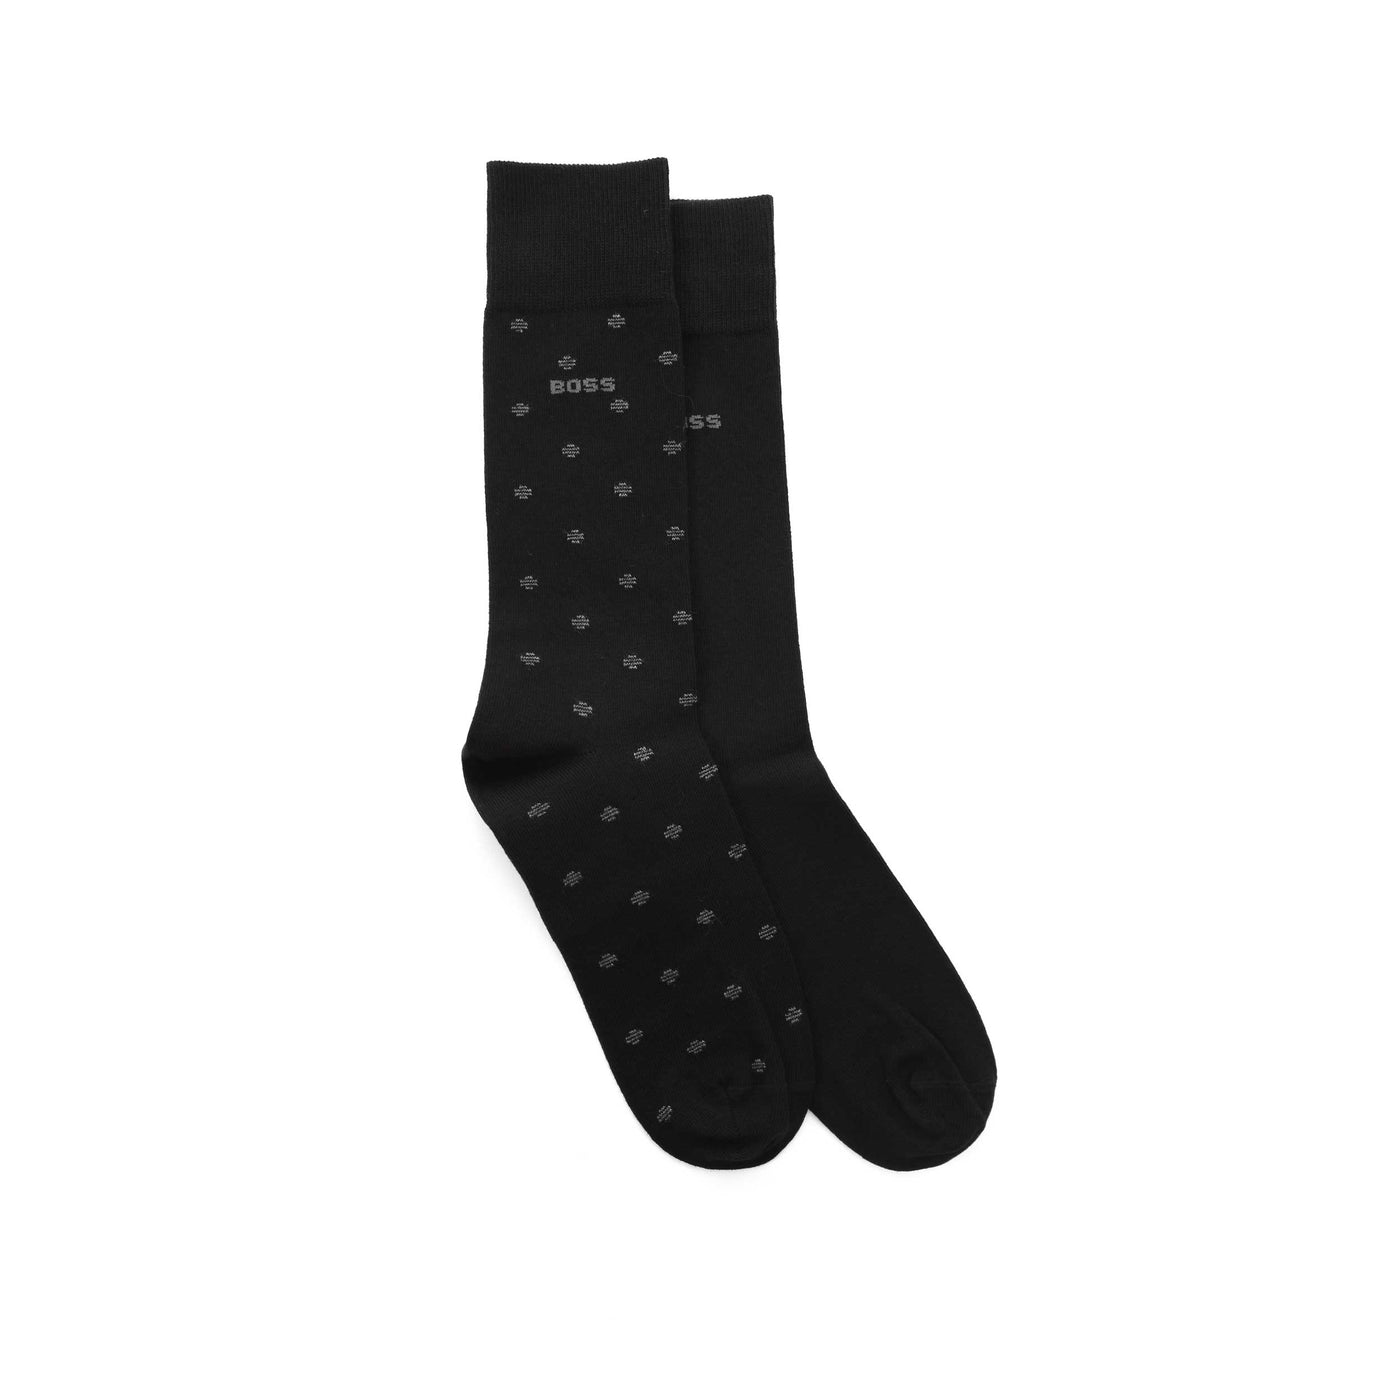 BOSS 2P RS Dots CC Sock in Black